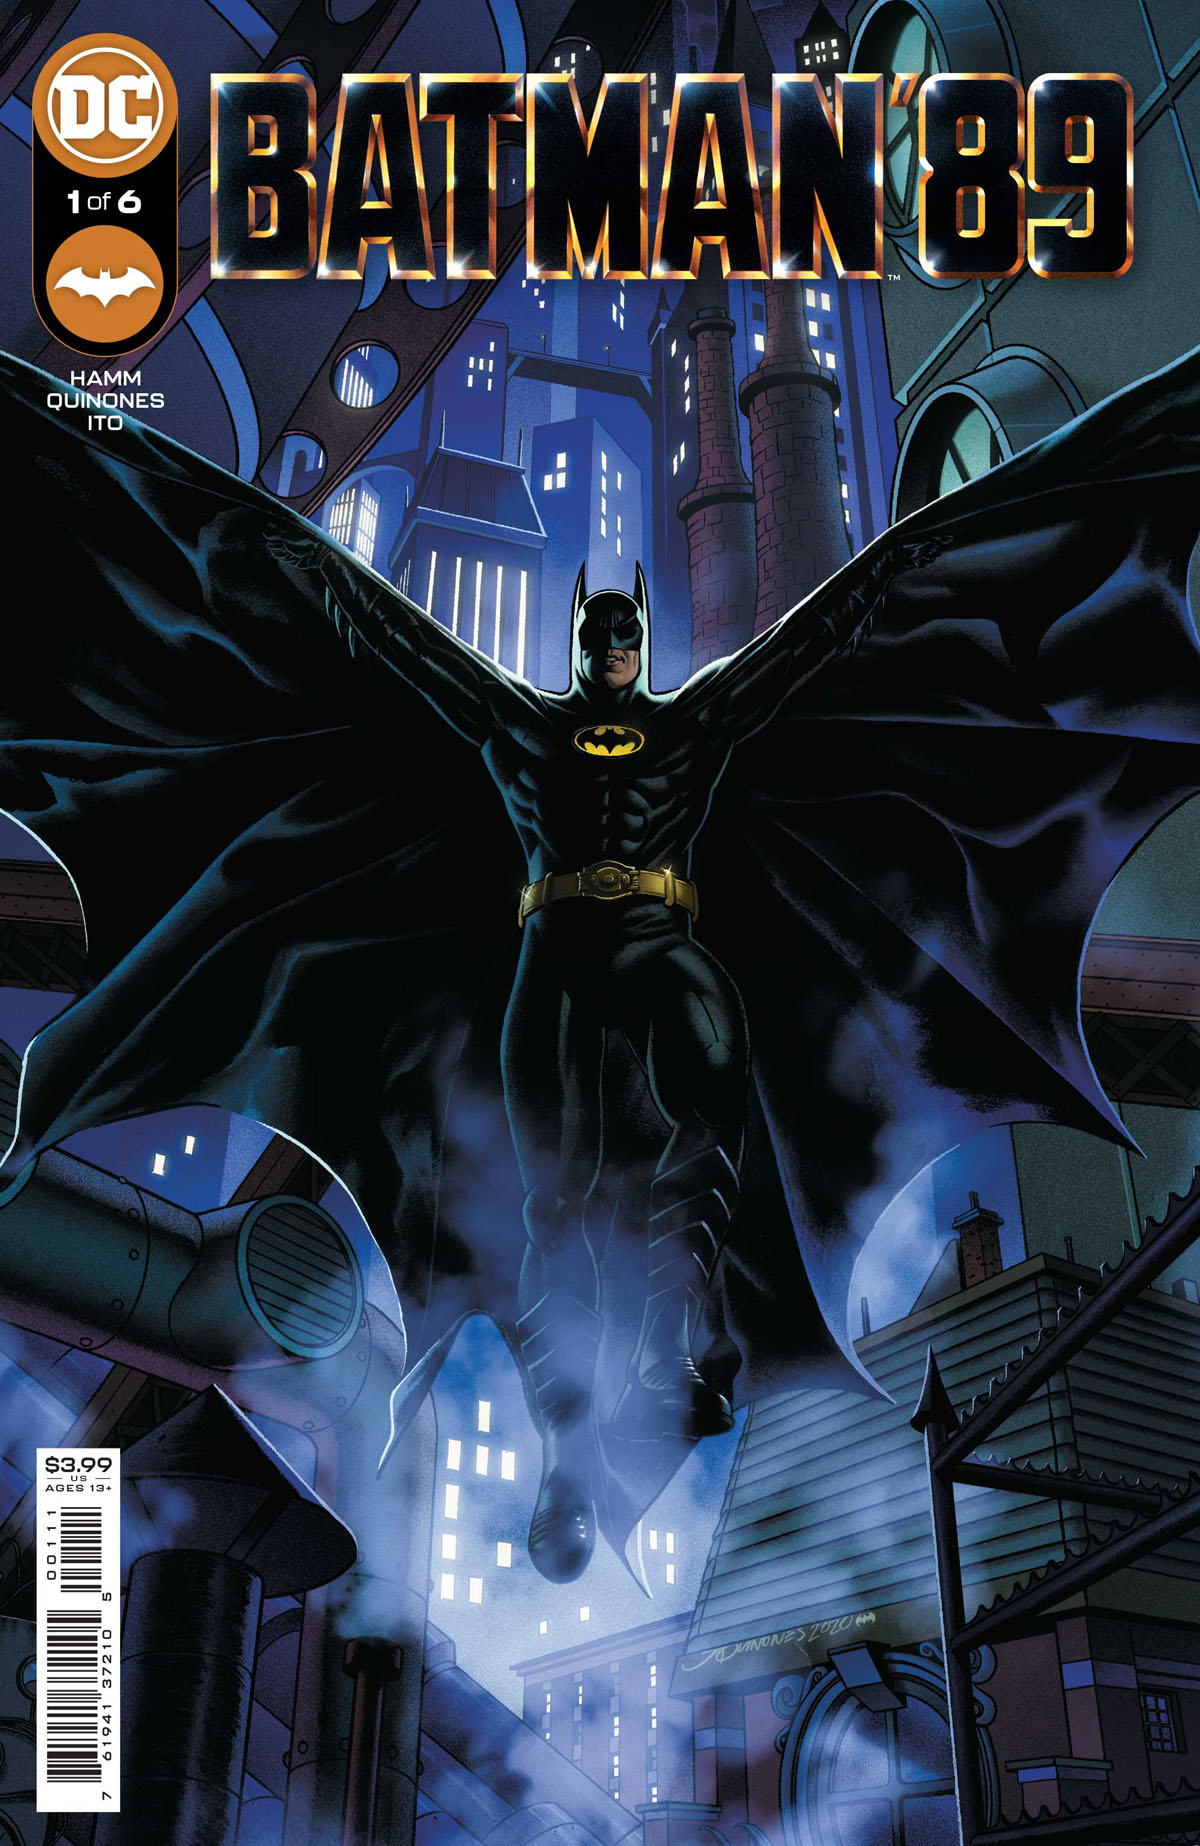 First Look At Batman '89 #1